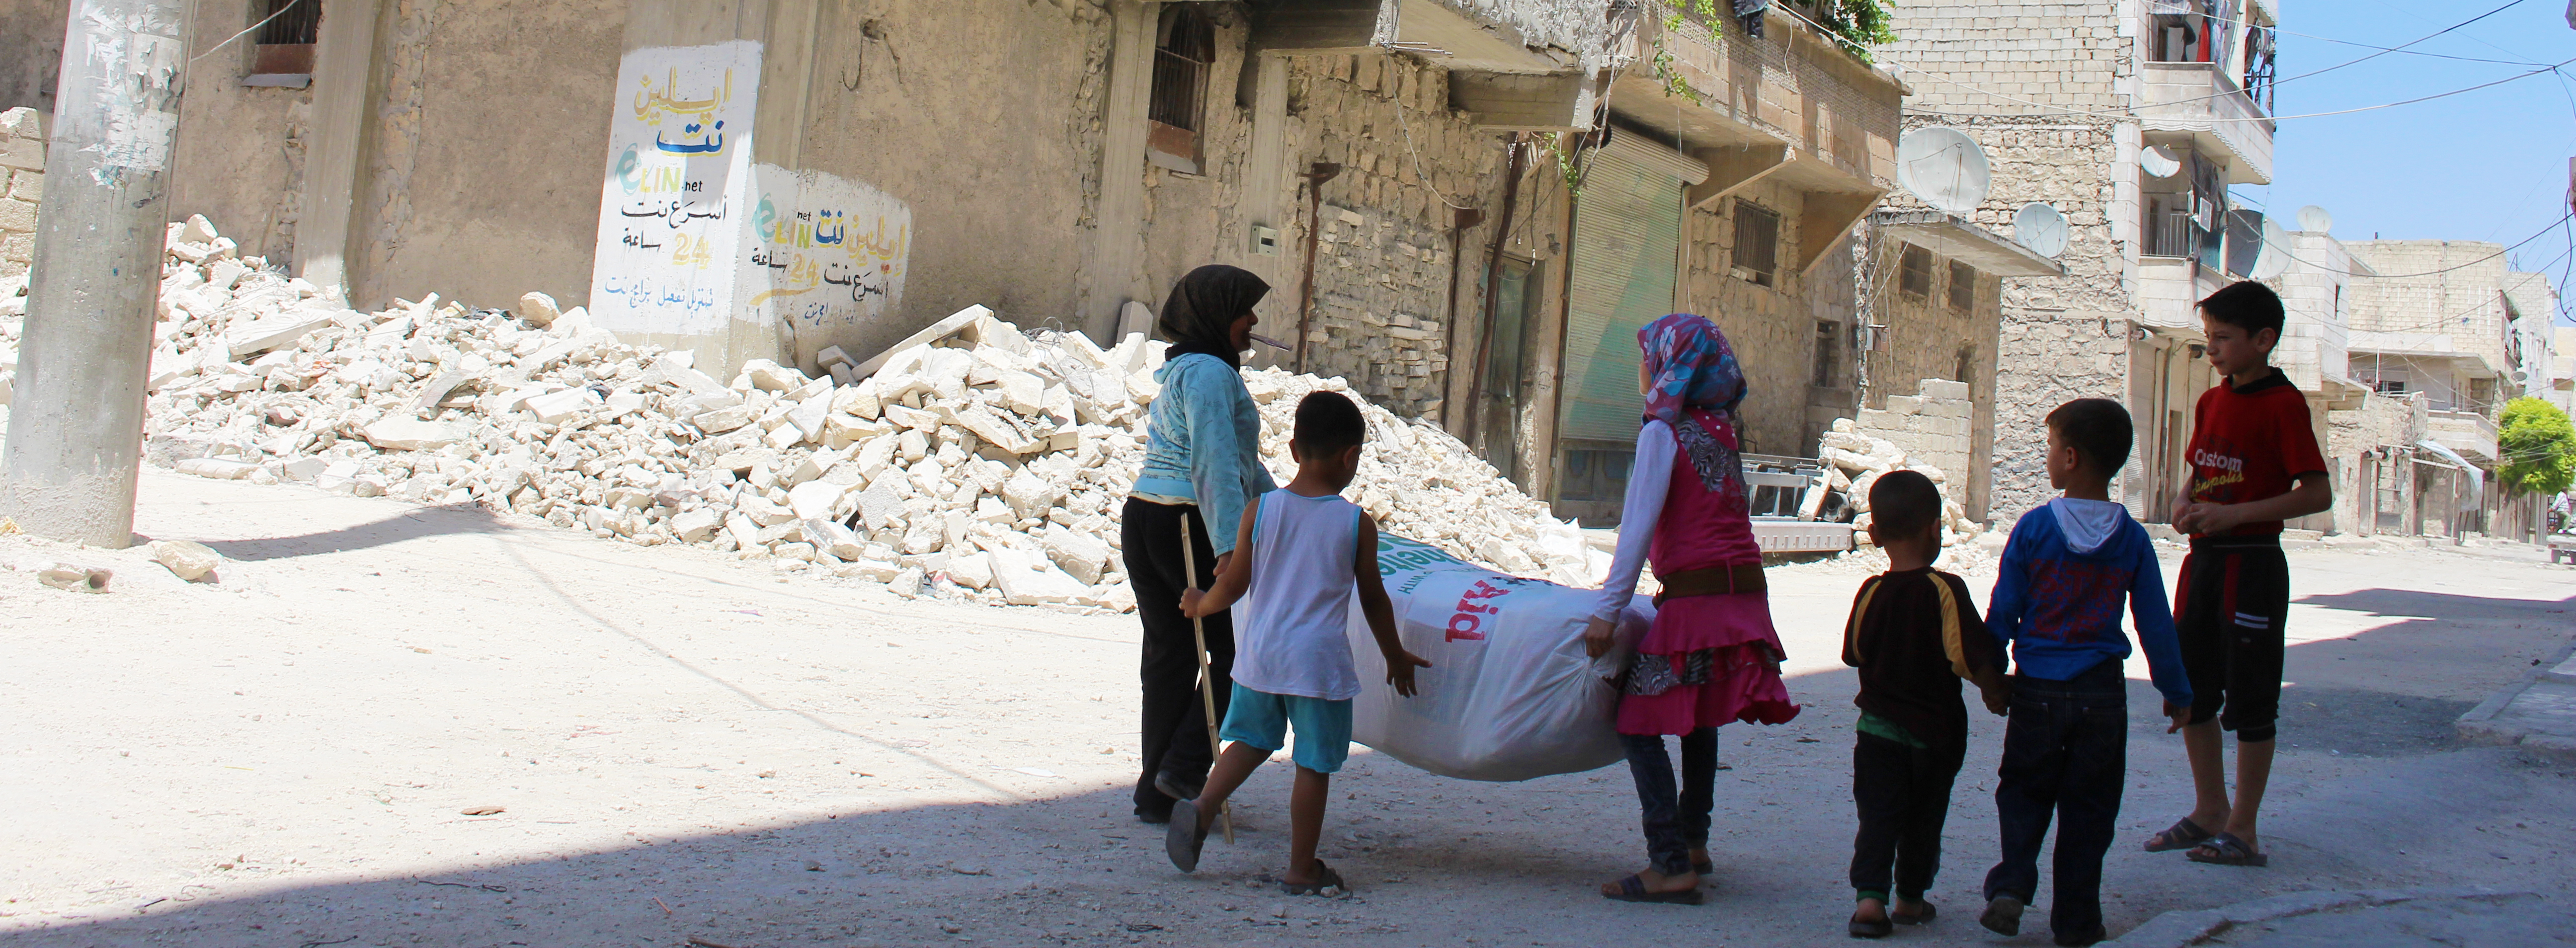 Syrian children receiving aid in Aleppo City